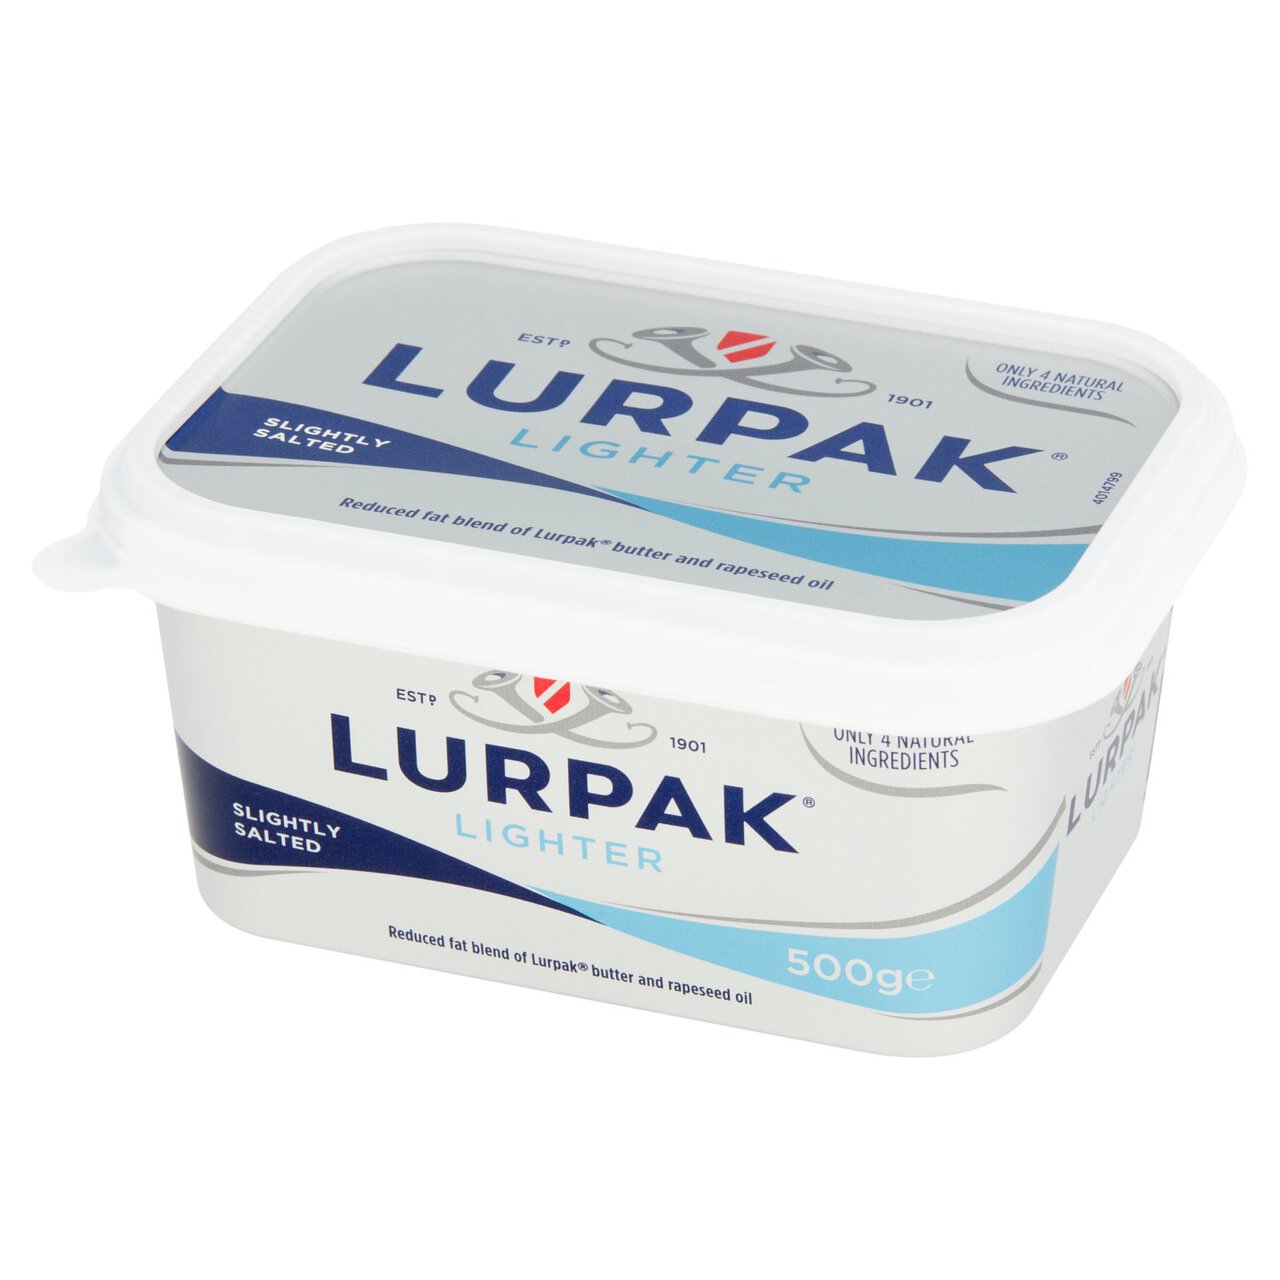 Lurpak Lighter Spreadable Blend of Butter and Rapeseed Oil 500g